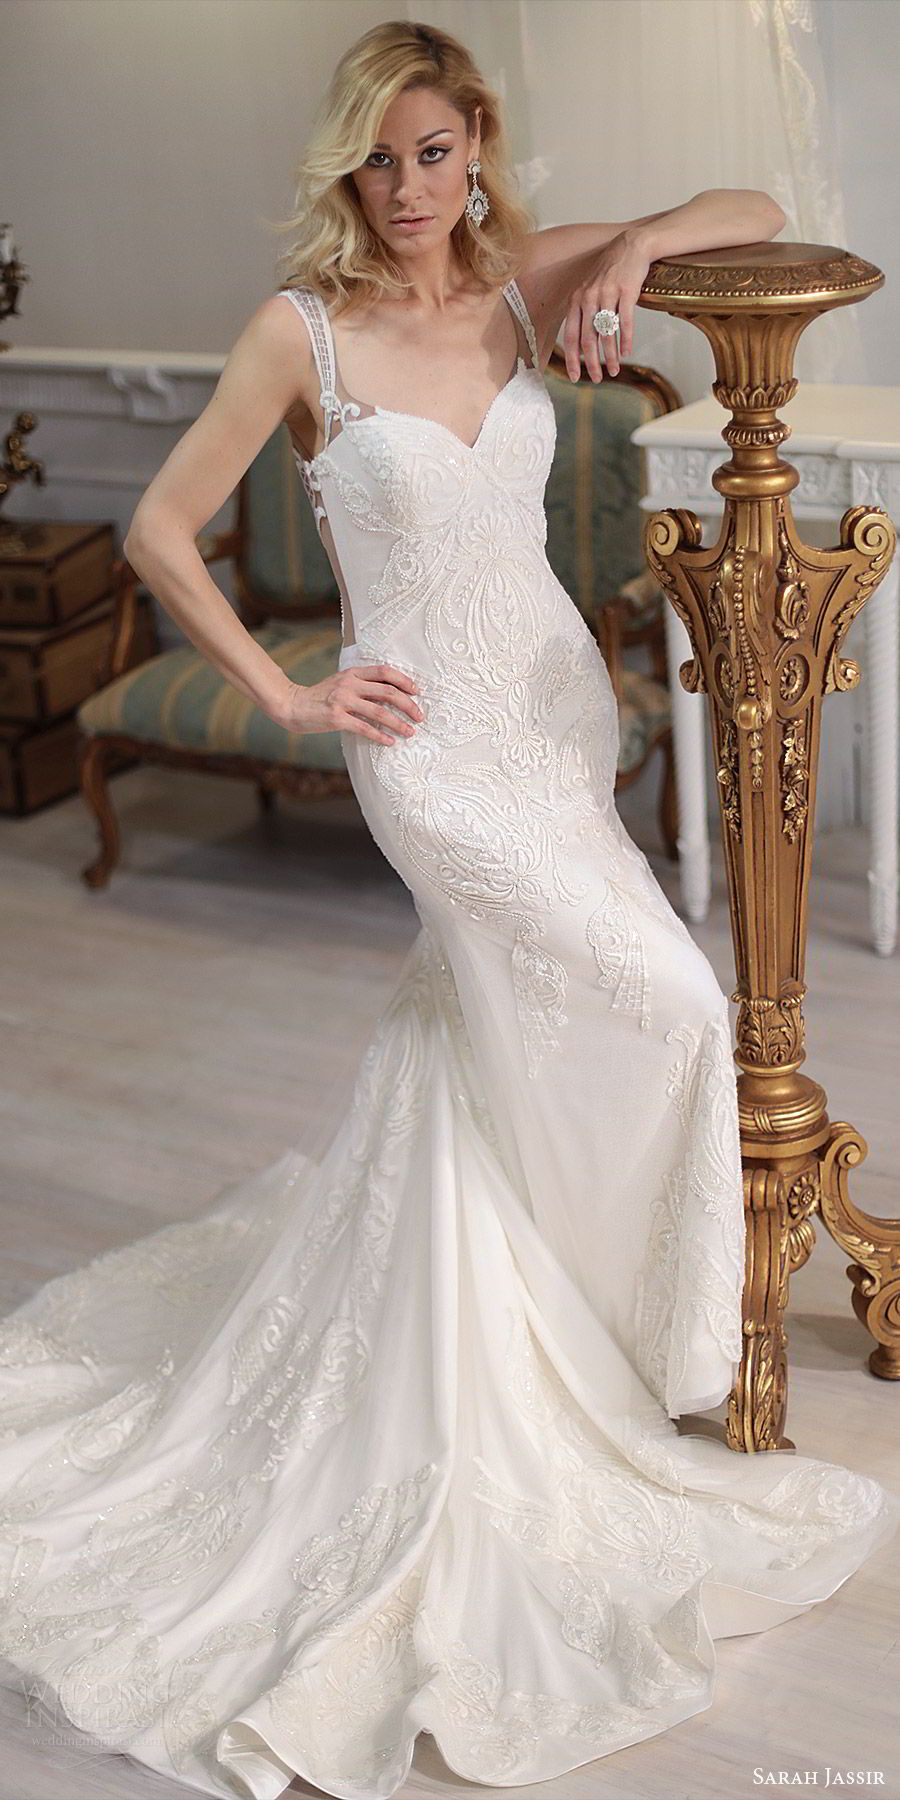 sarah jassir bridal 2018 sleeveless illusion straps sweetheart heavily embellished wedding dress (maya) mv chapel train elegant